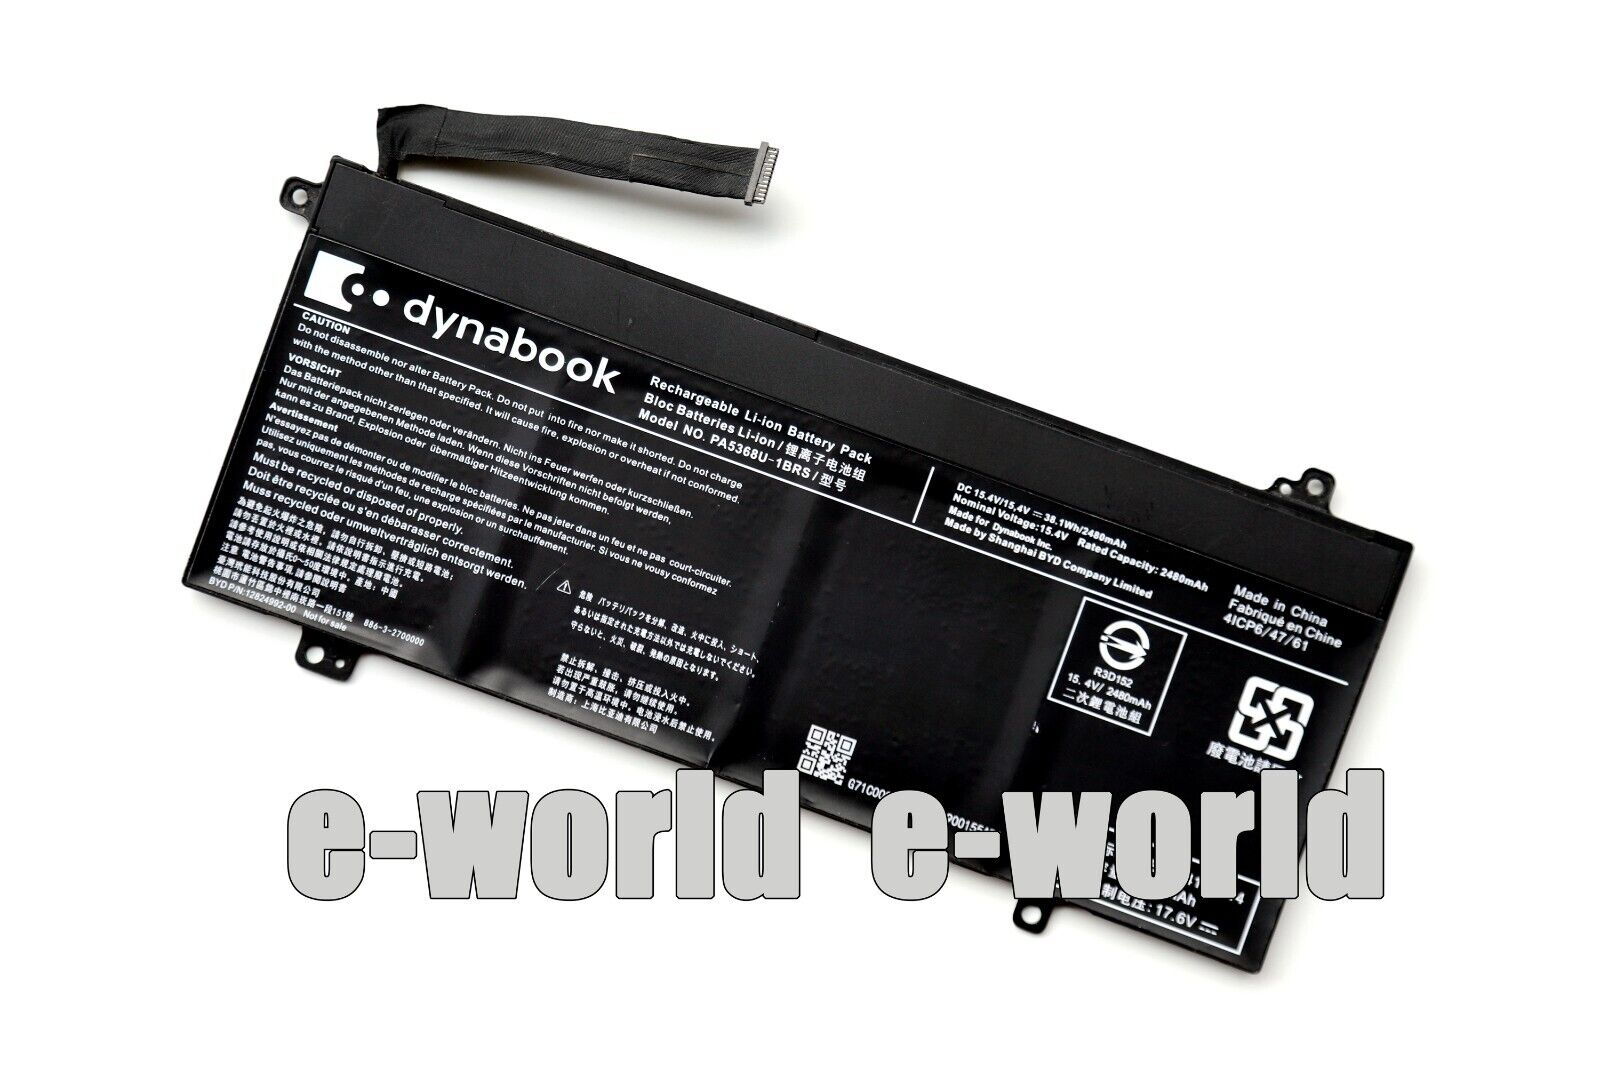 NEW Genuine PA5368U-1BRS OEM Battery For Toshiba Dynabook Satellite Pro L50-G